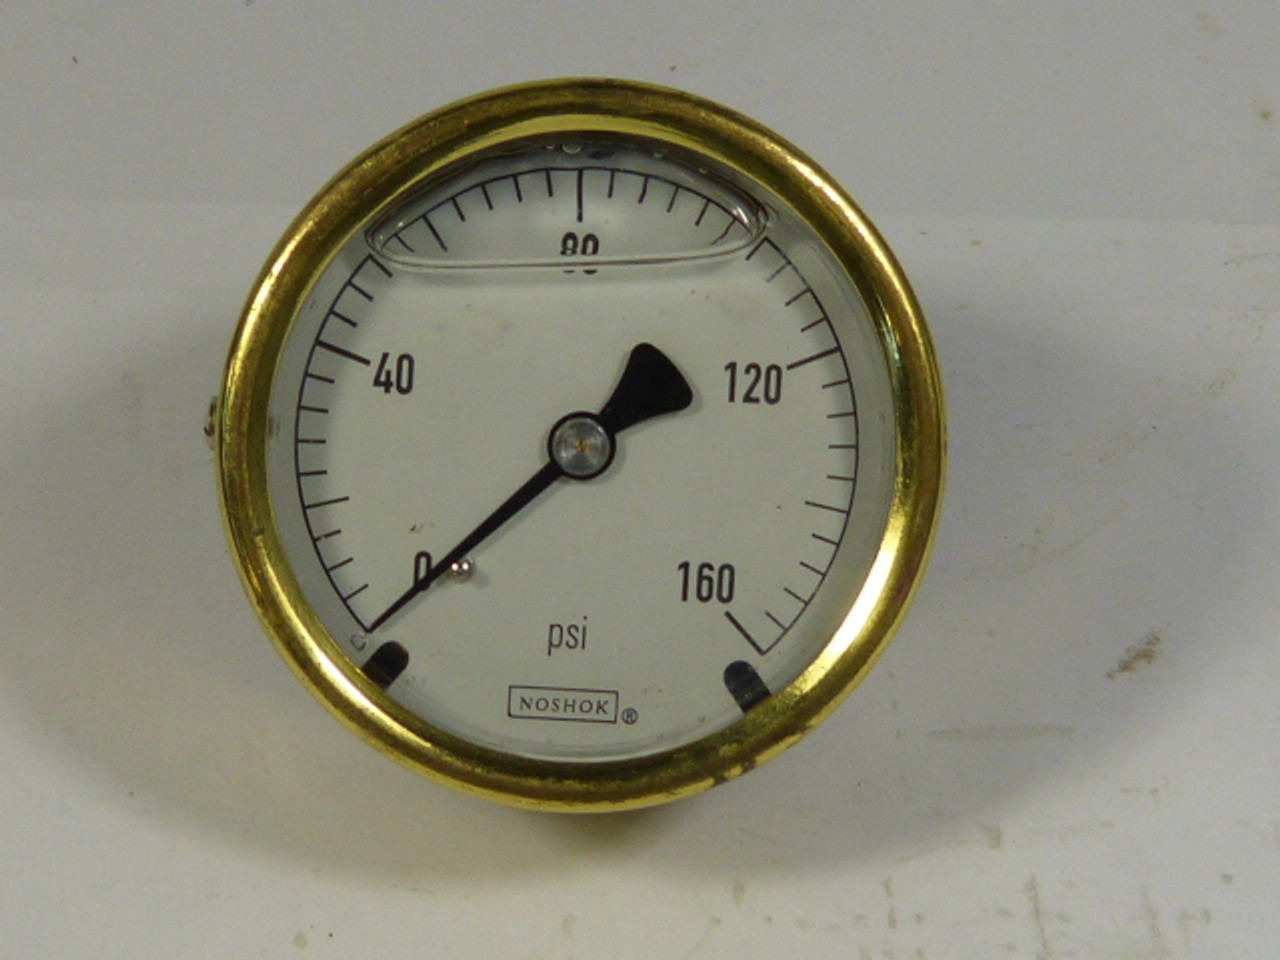 Noshok 0-160 Pressure Gauge 0-160PSI USED